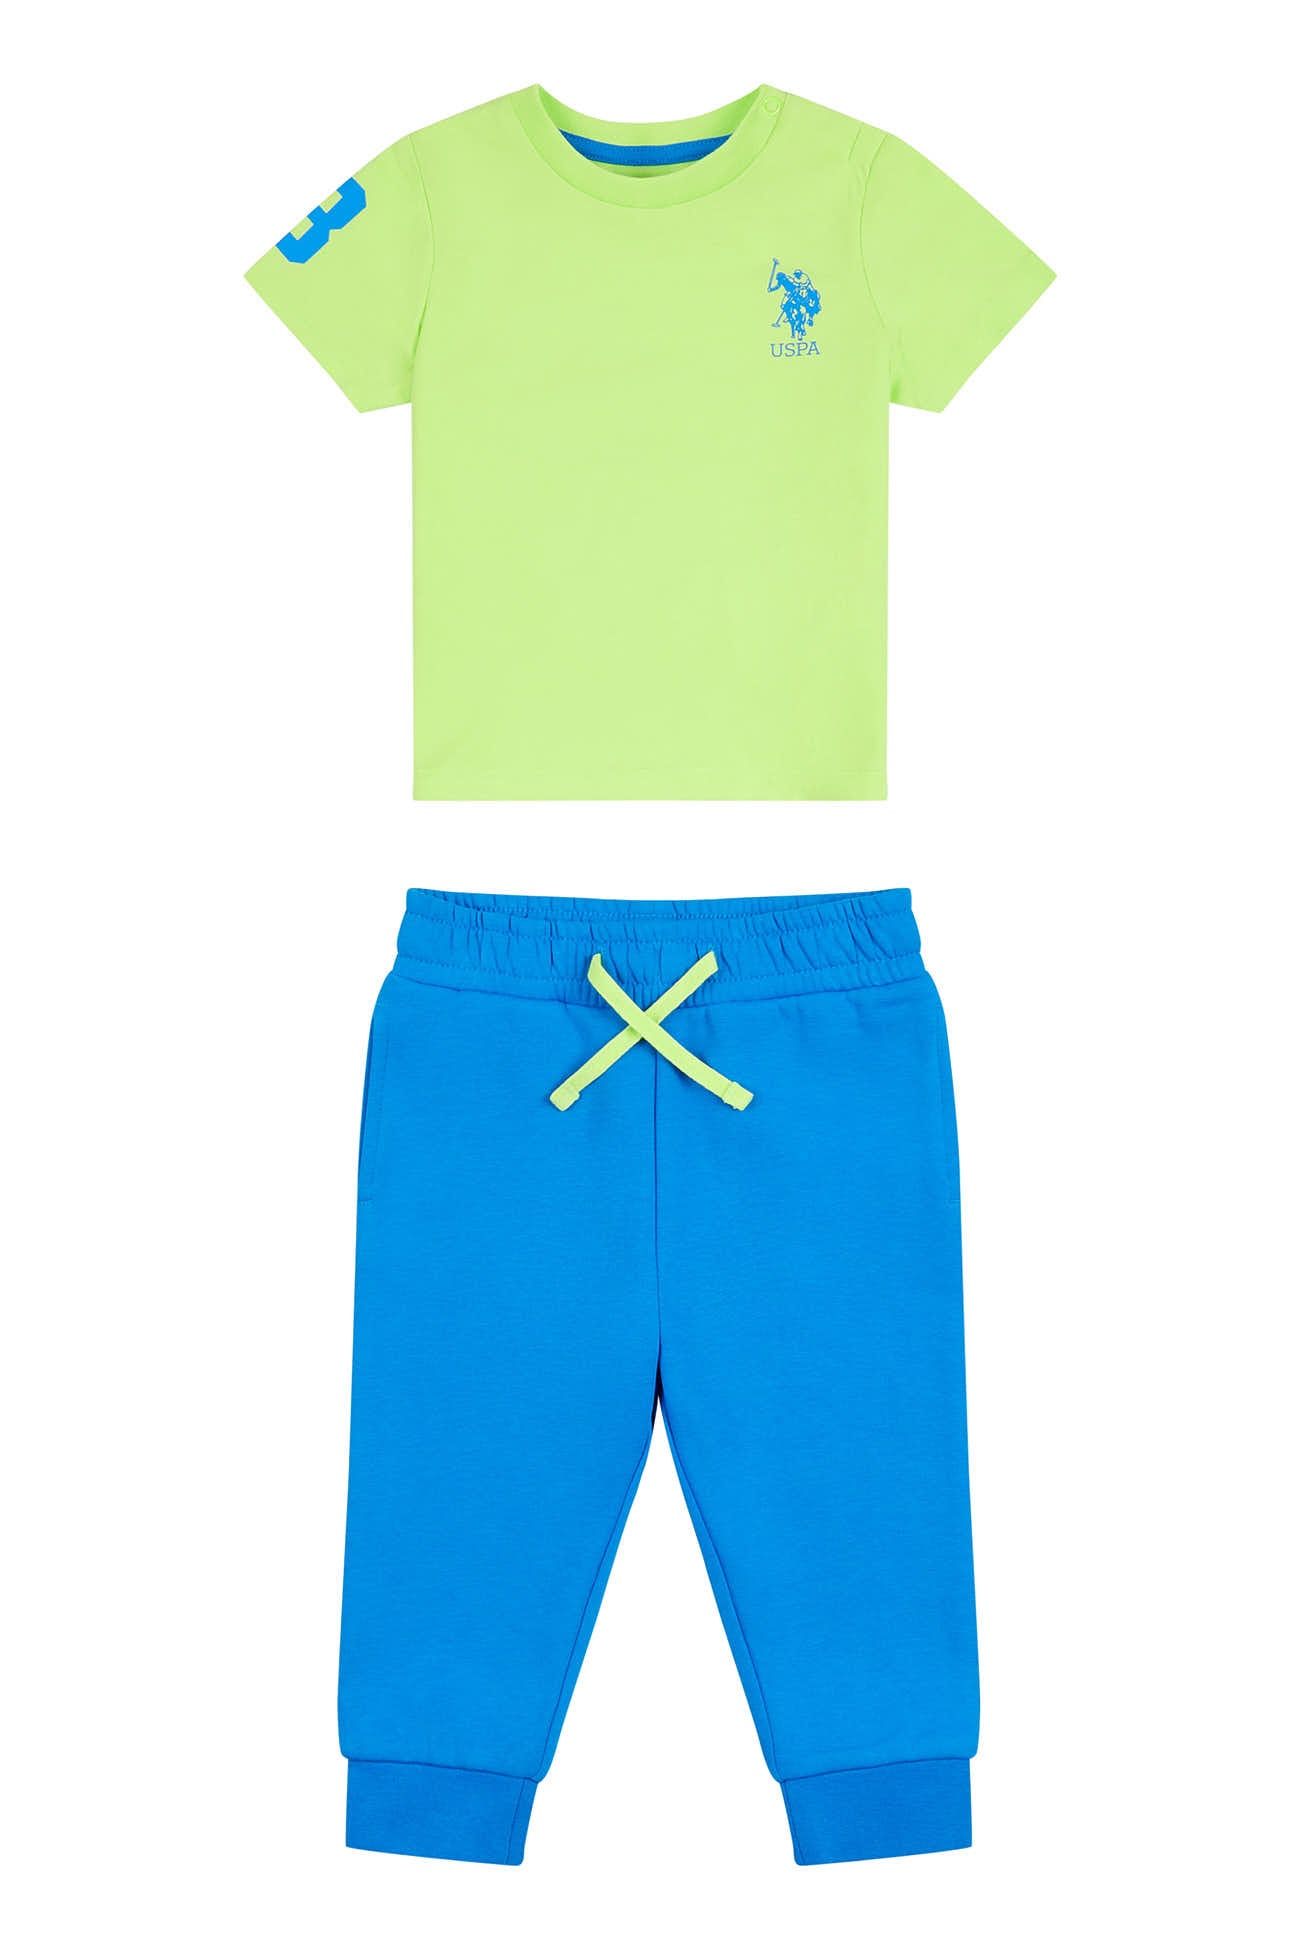 U.S. Polo Assn. Baby Player 3 T-Shirt & Jogger Set in Sharp Green